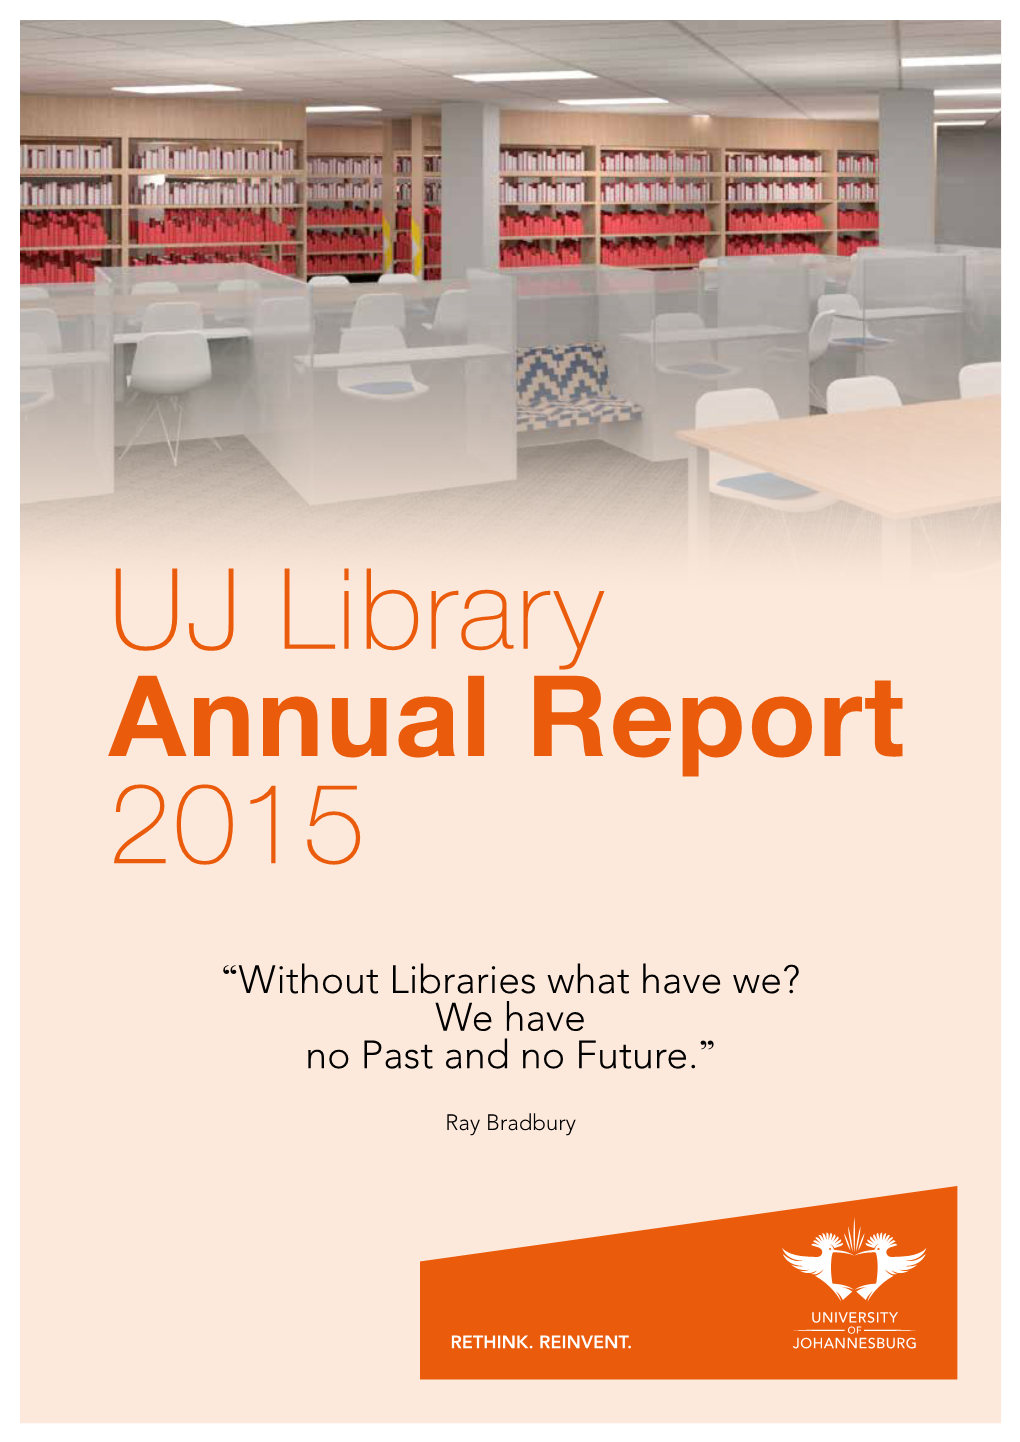 UJ Library Annual Report 2015